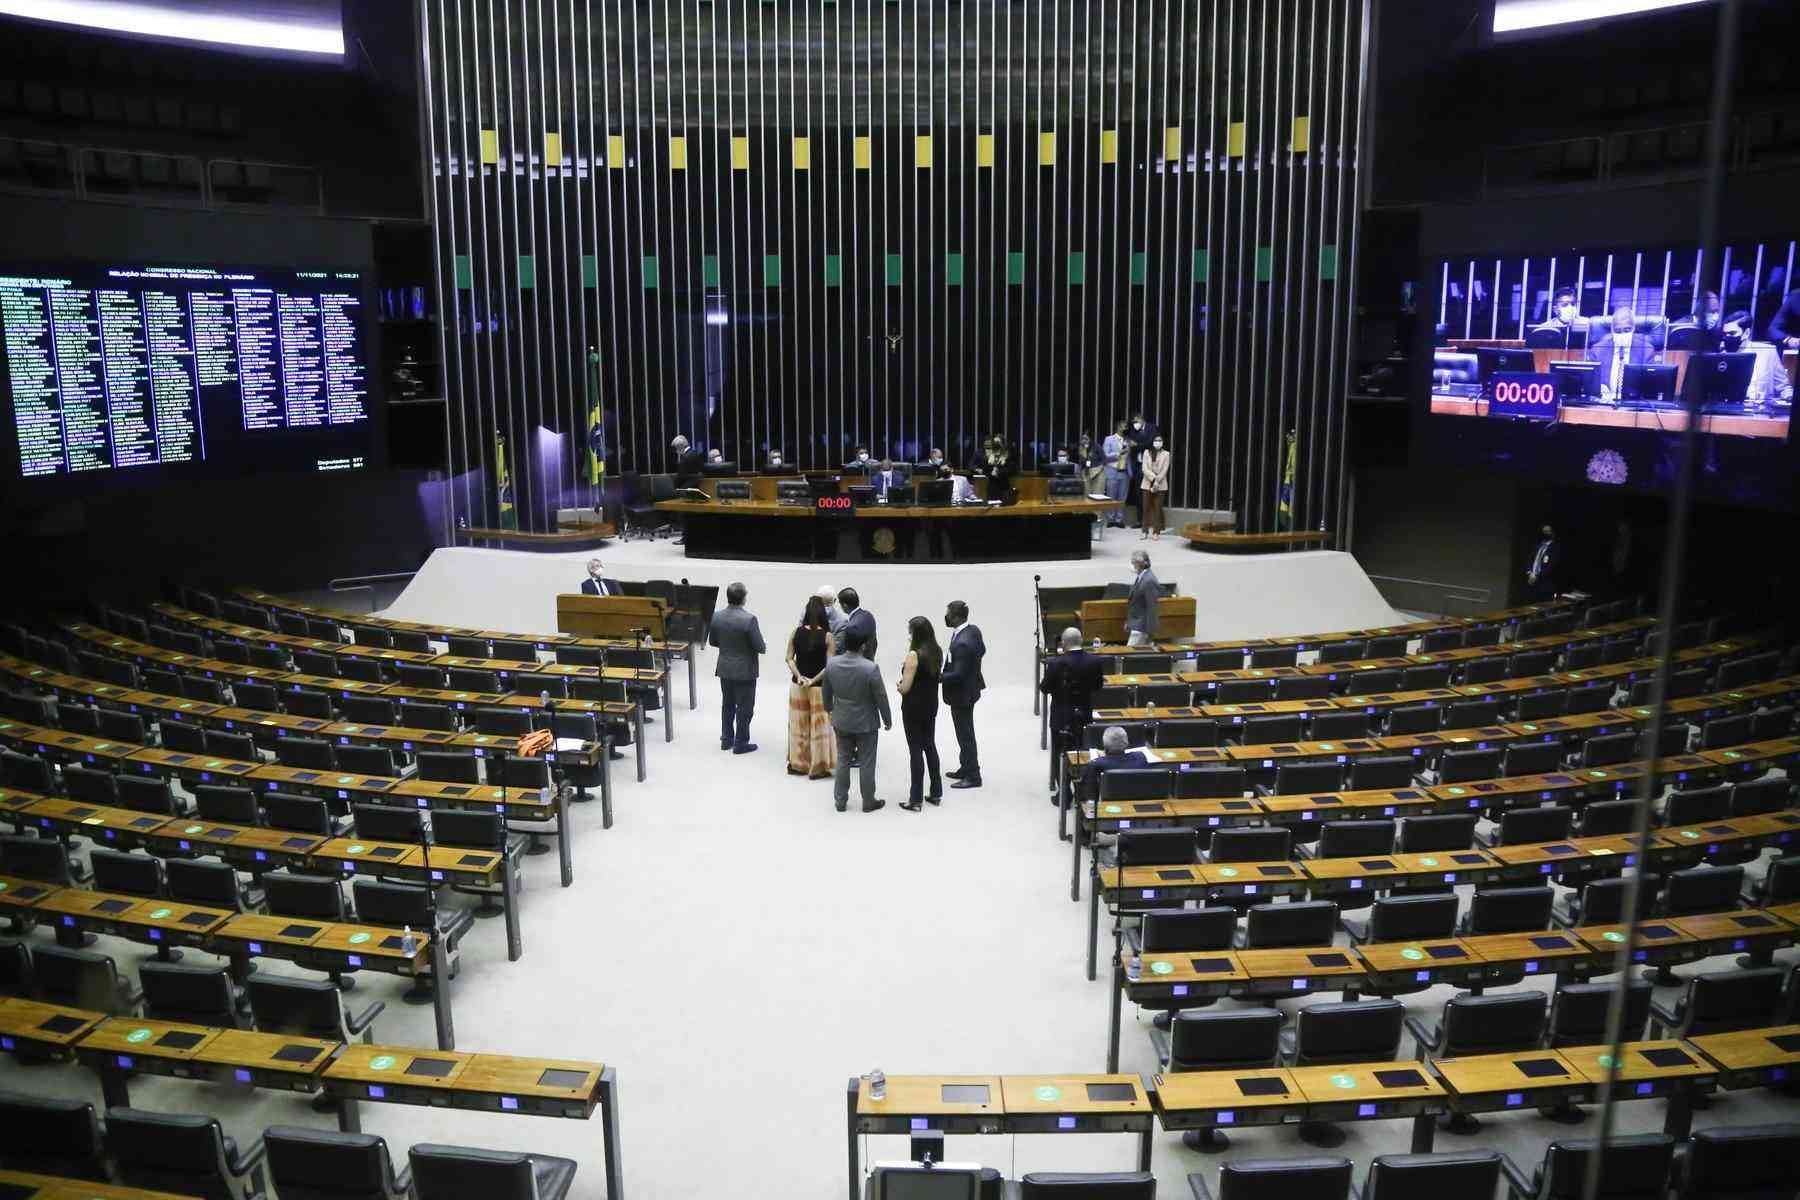 Proposta de Emenda - Câmara Municipal de Muzambinho - MG